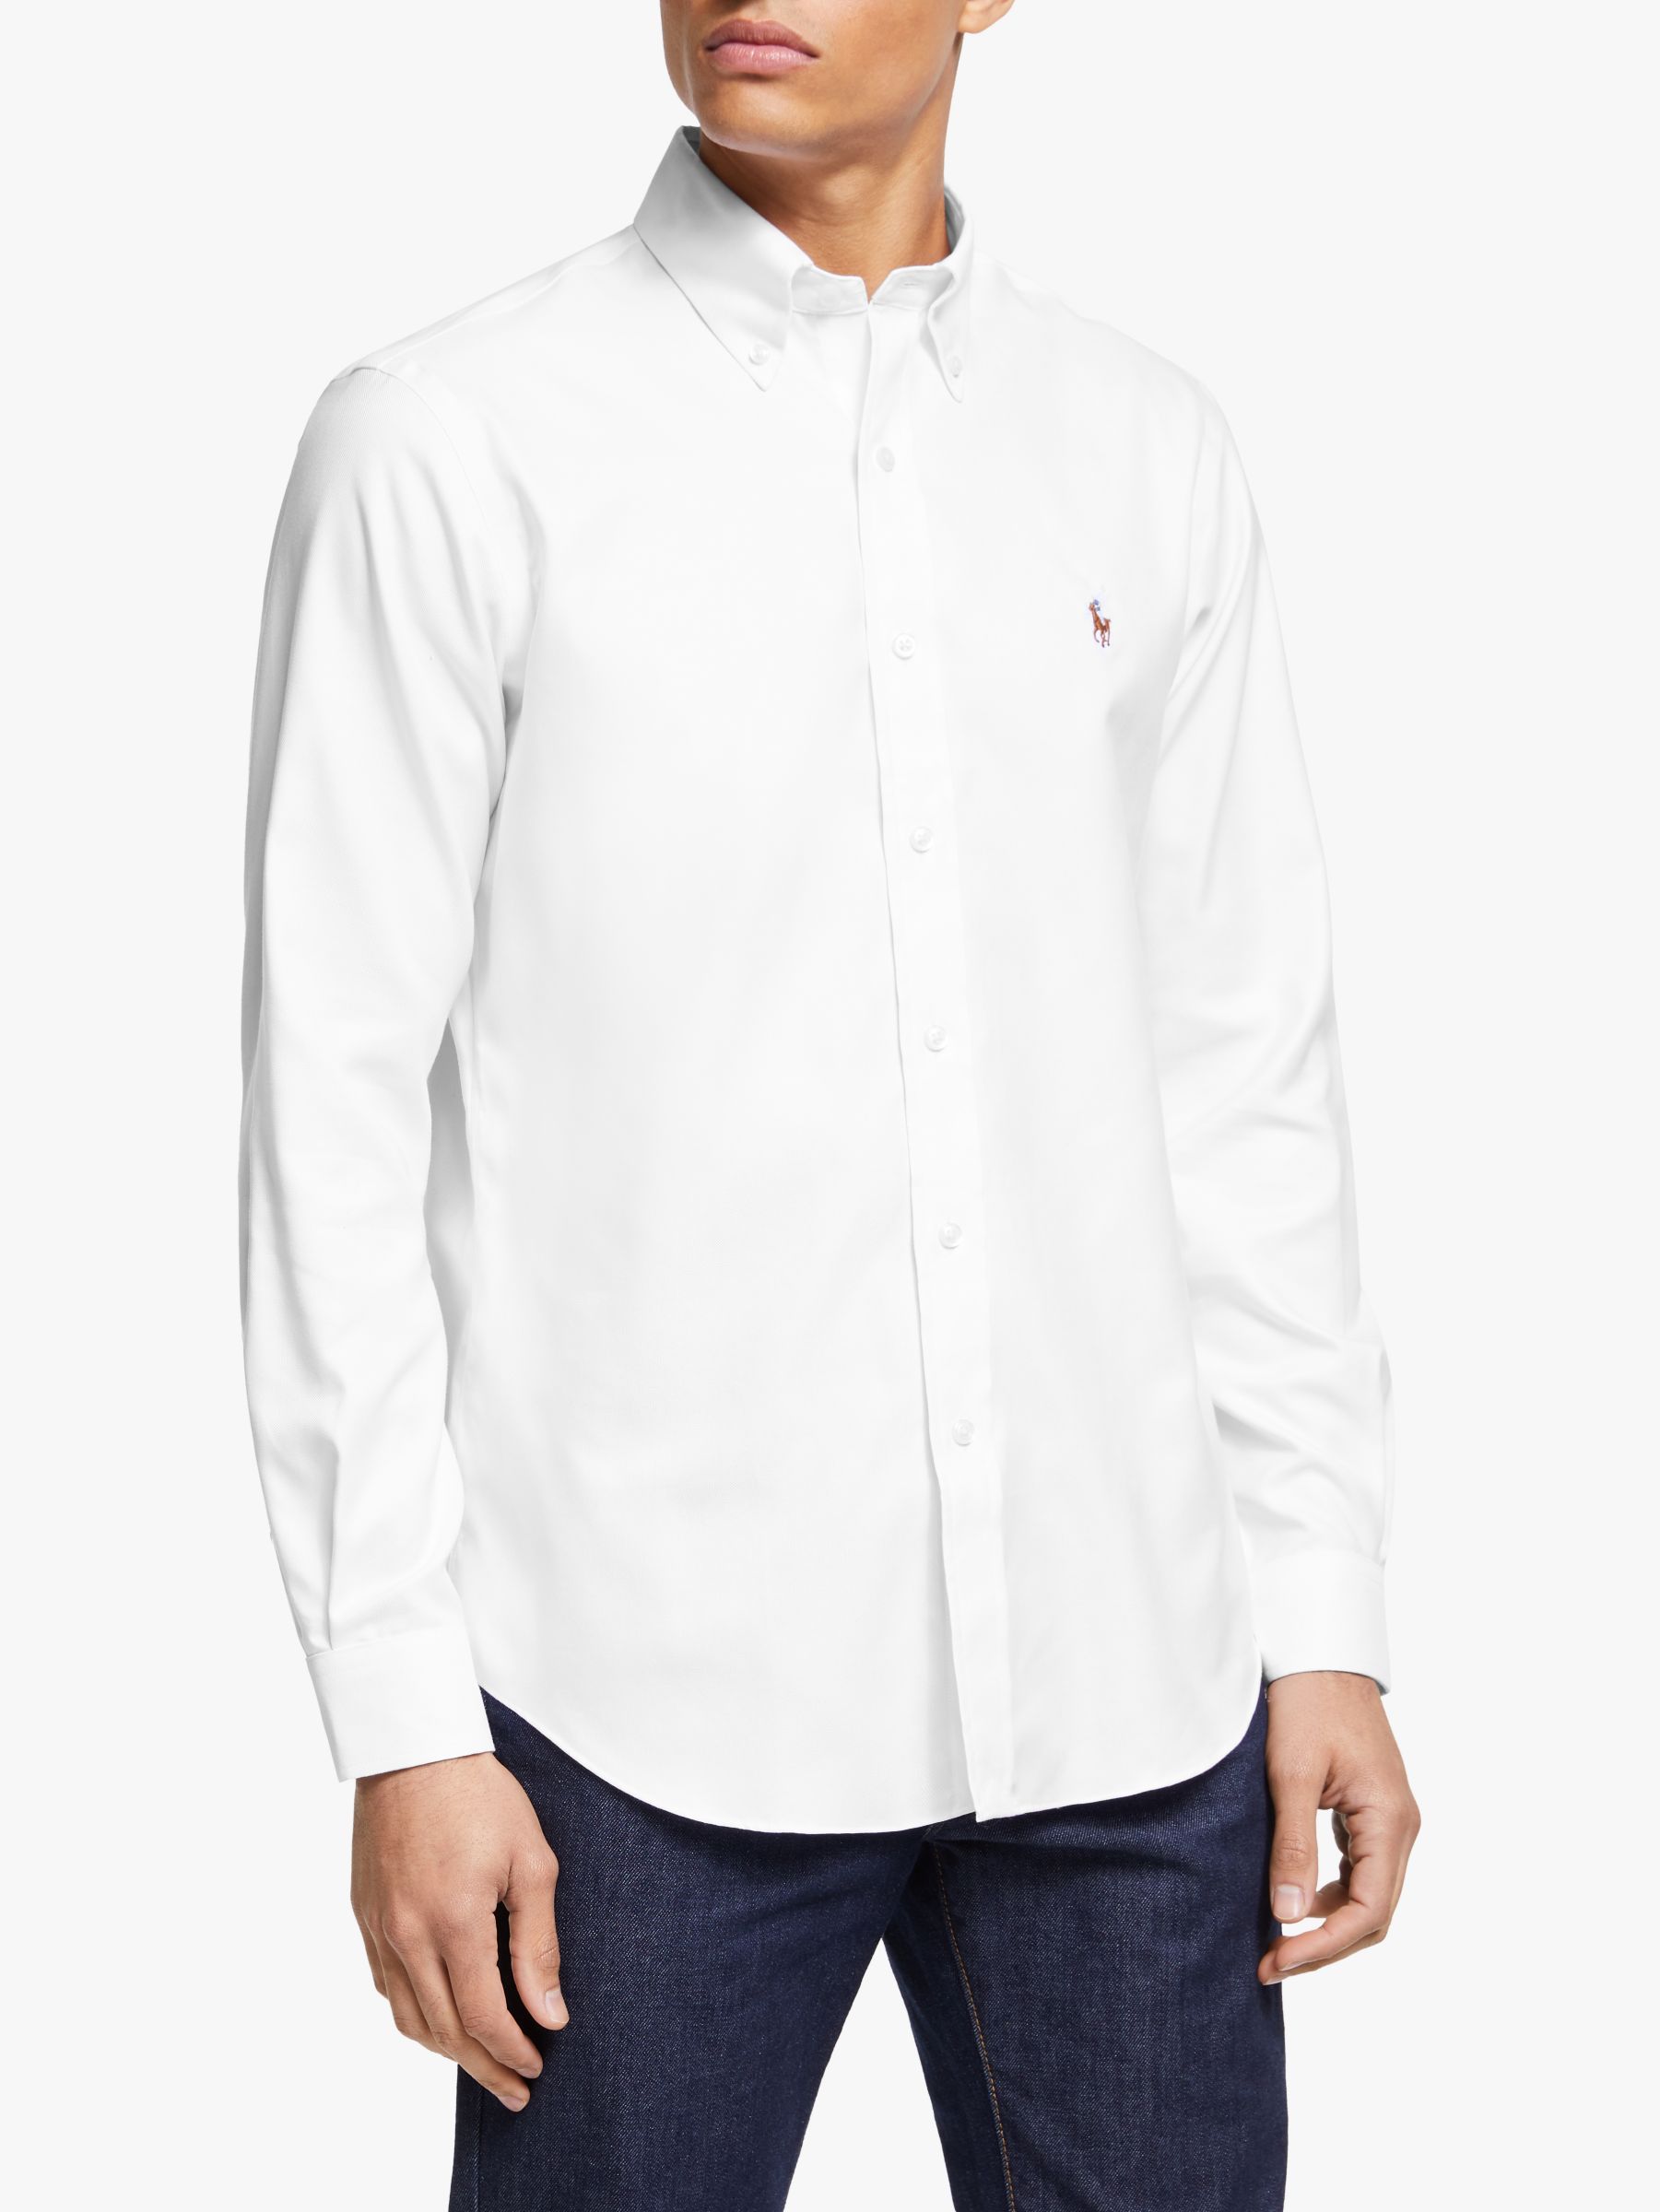 mens white ralph shirt